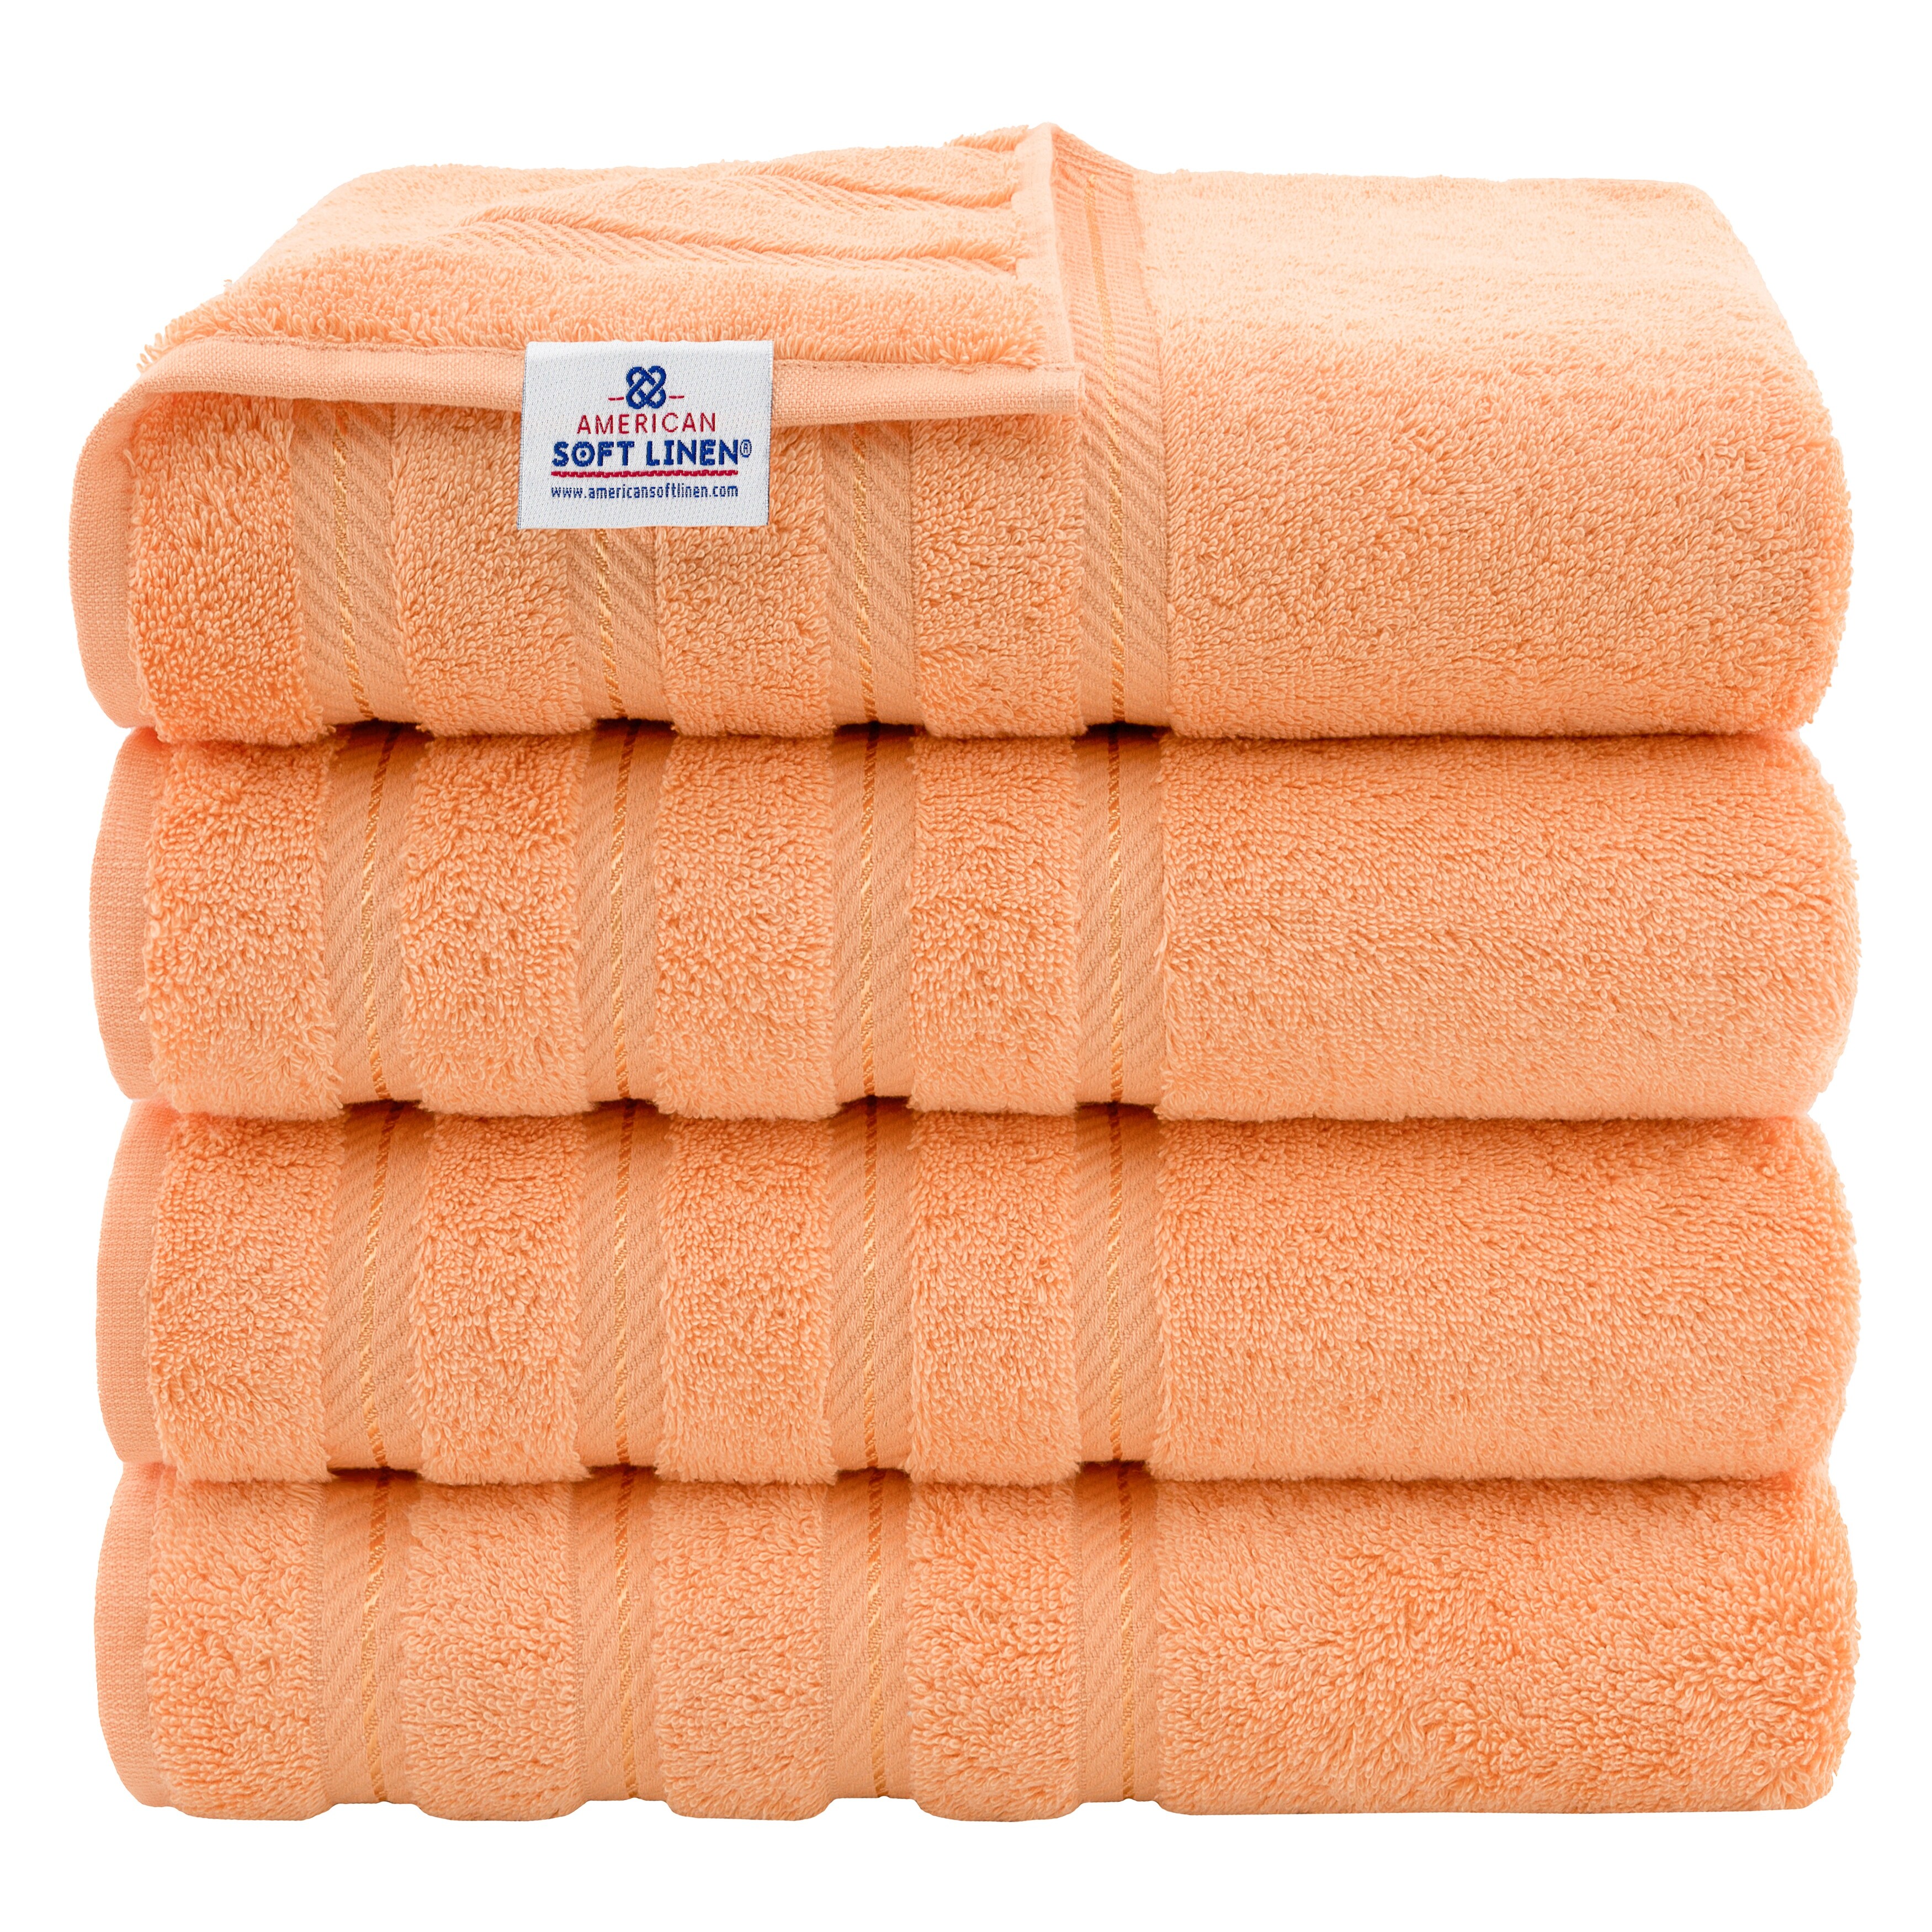 https://ak1.ostkcdn.com/images/products/is/images/direct/1dfdda2dc0adbf5504b5f7e8d29e436d981e572f/American-Soft-Linen-Turkish-Cotton-4-Piece-Bath-Towel-Set.jpg